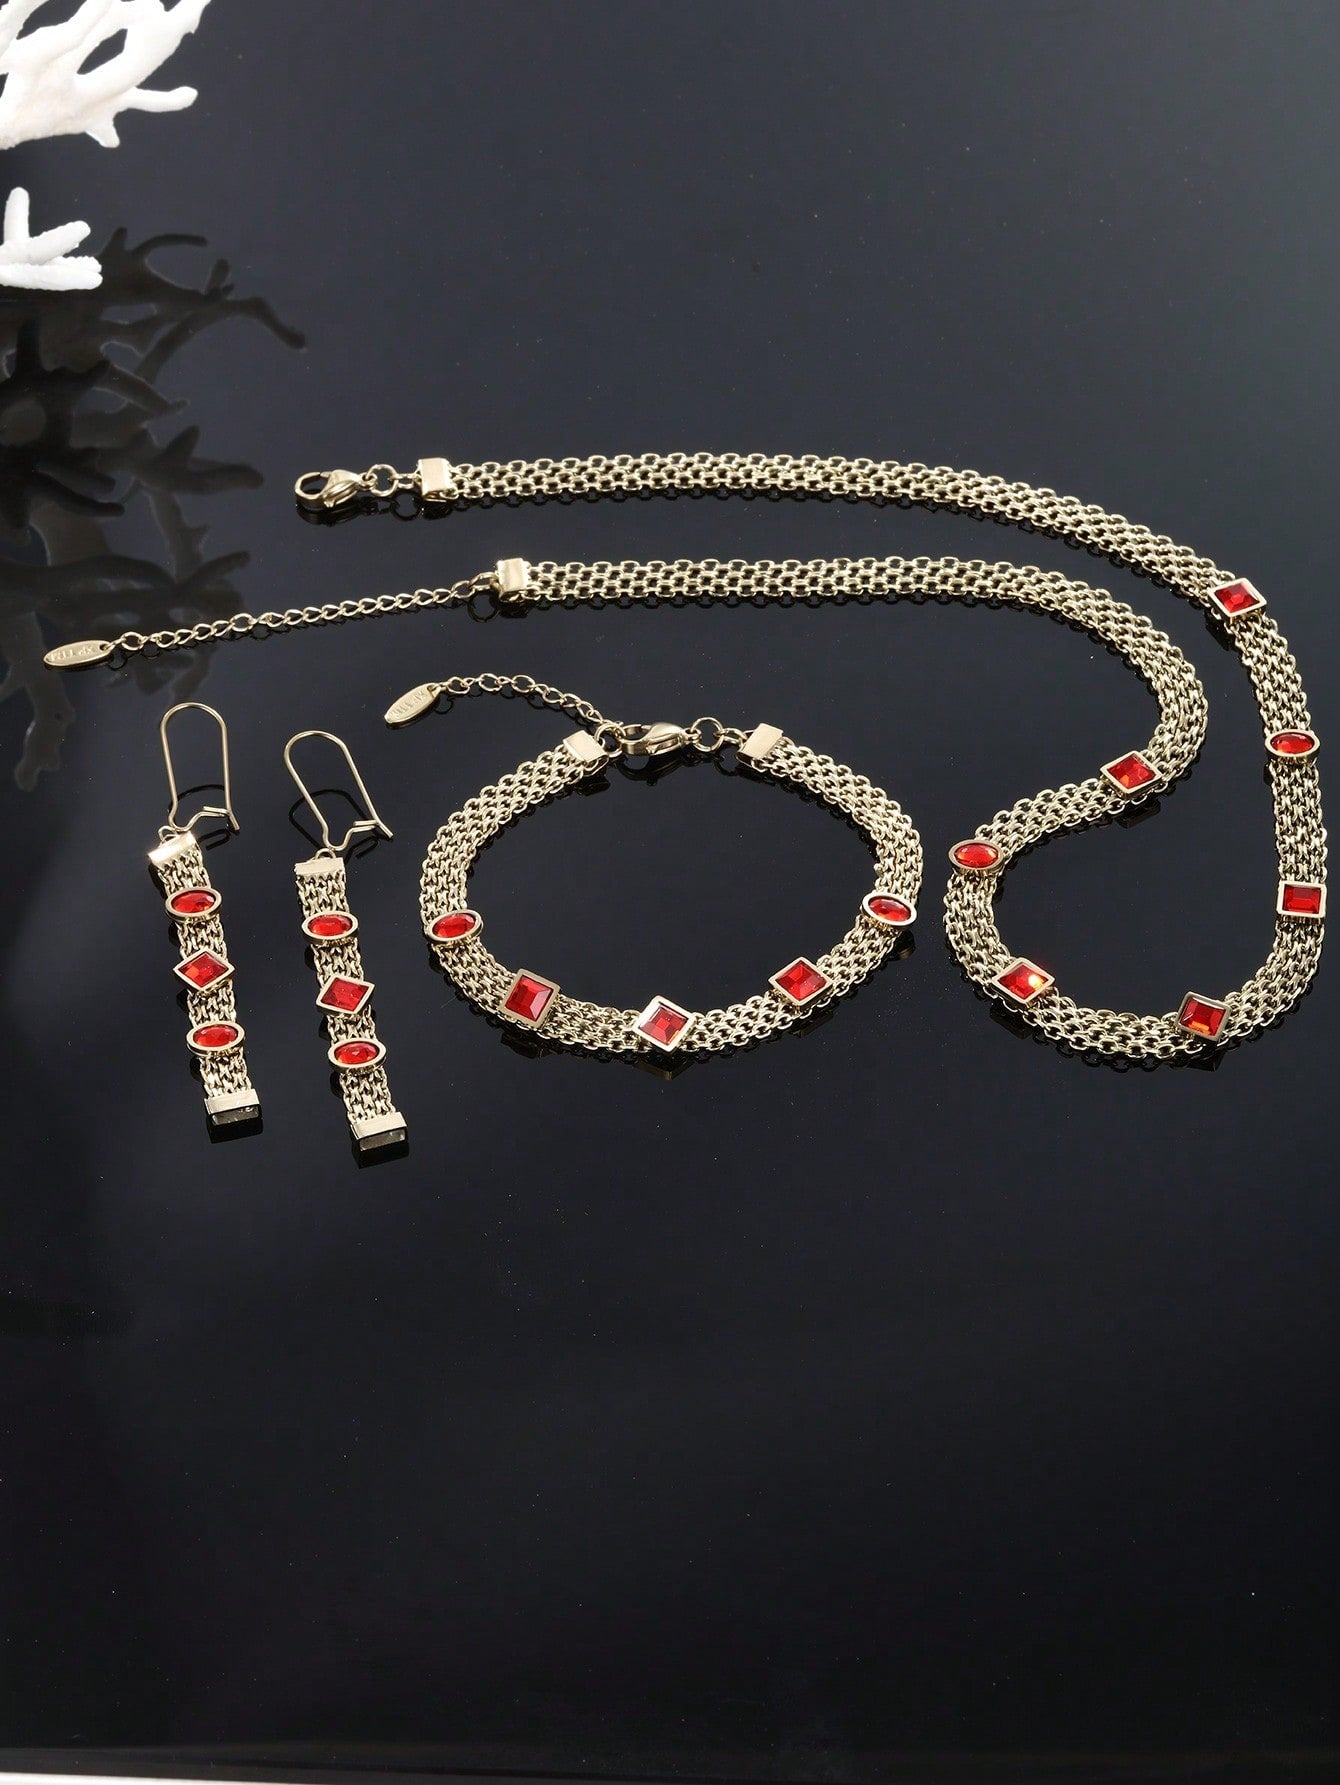 Alluring faux ruby bracelet, earrings & necklace set - JuVons